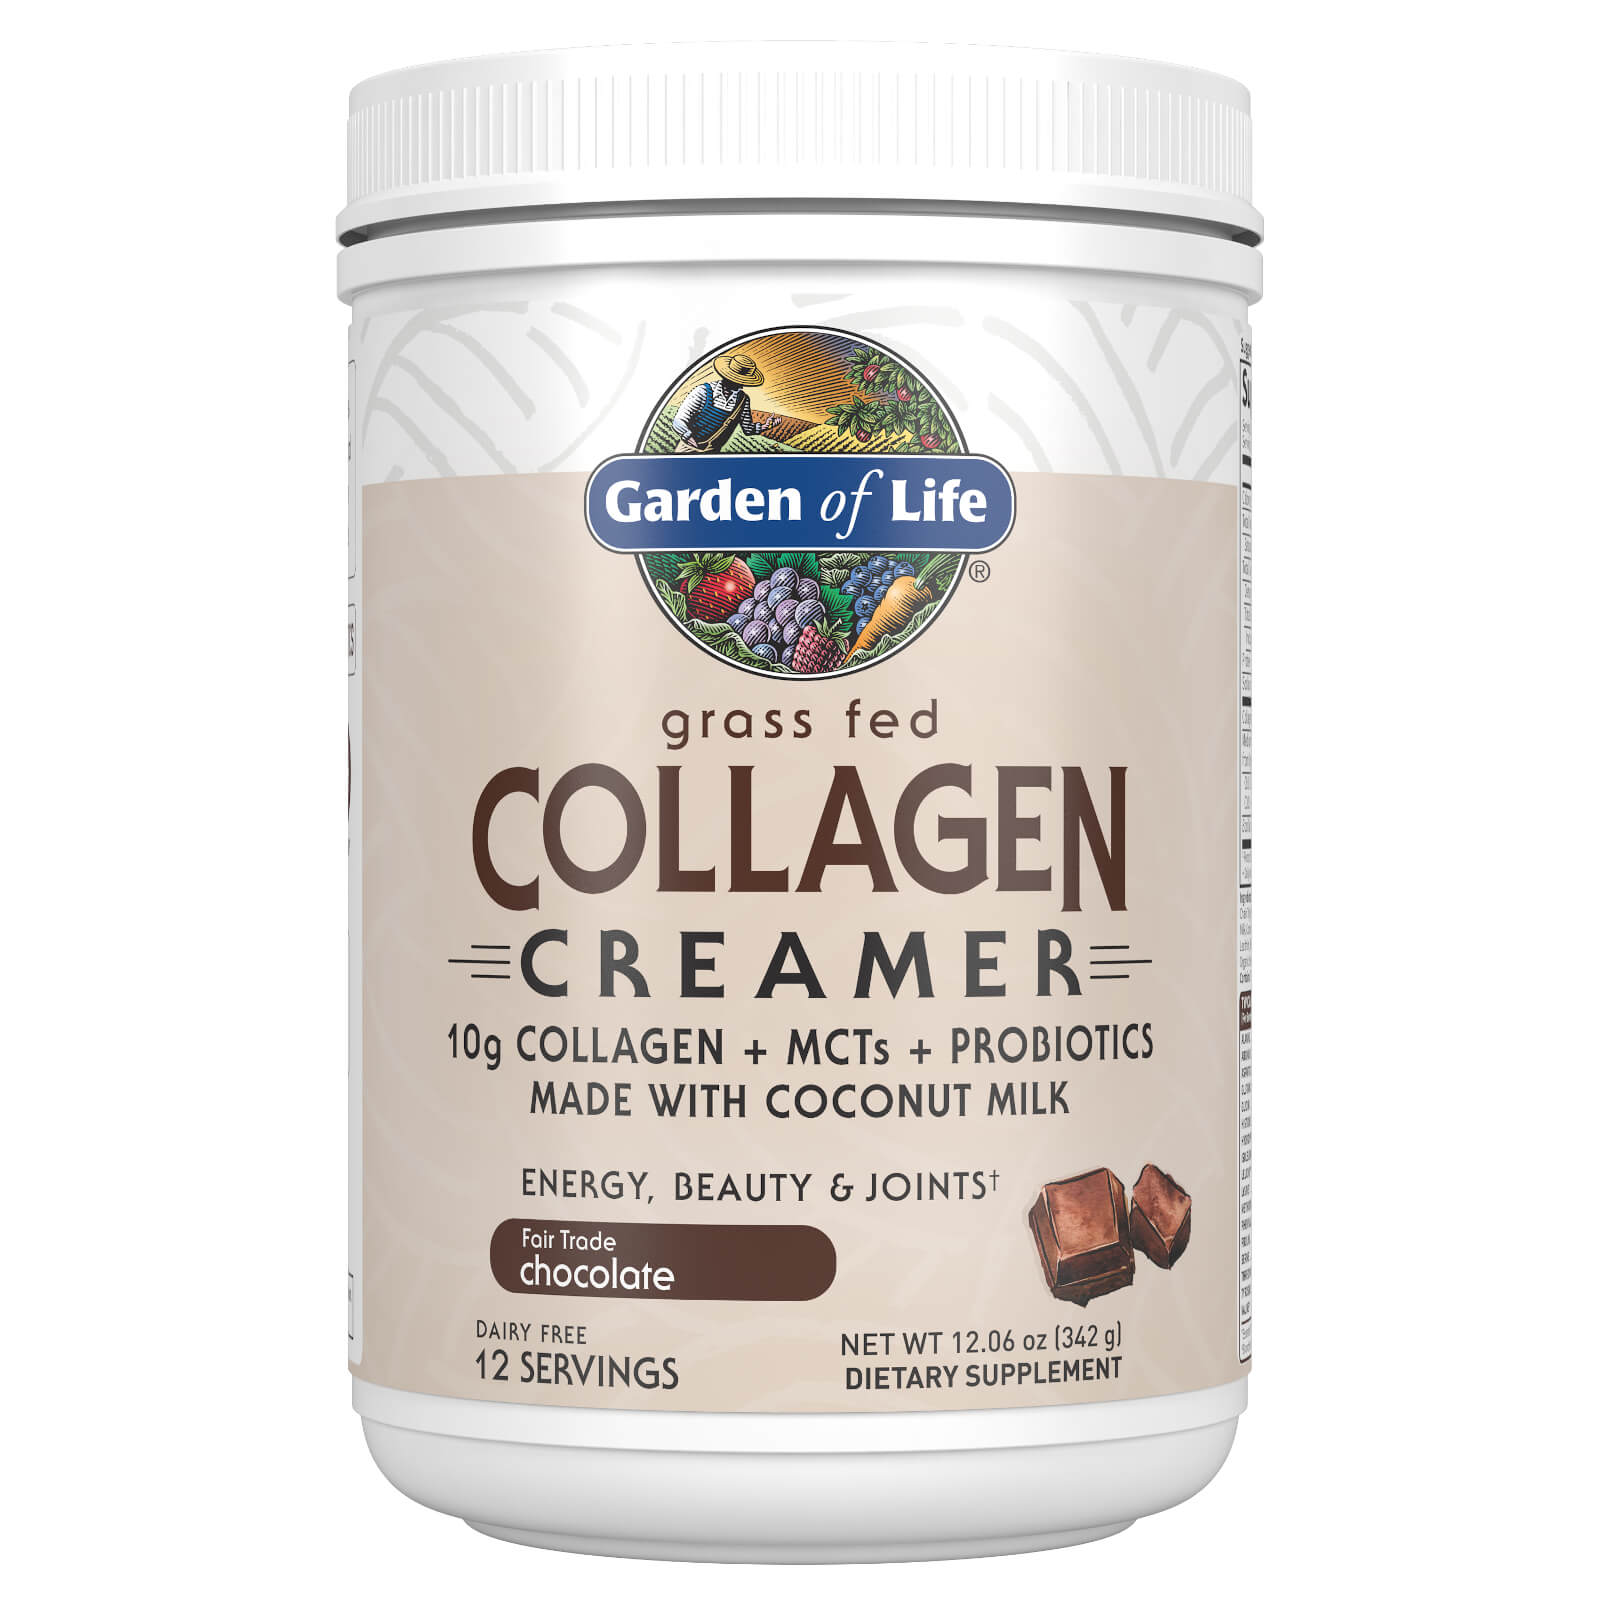 Crema de colágeno - Chocolate - 342 g